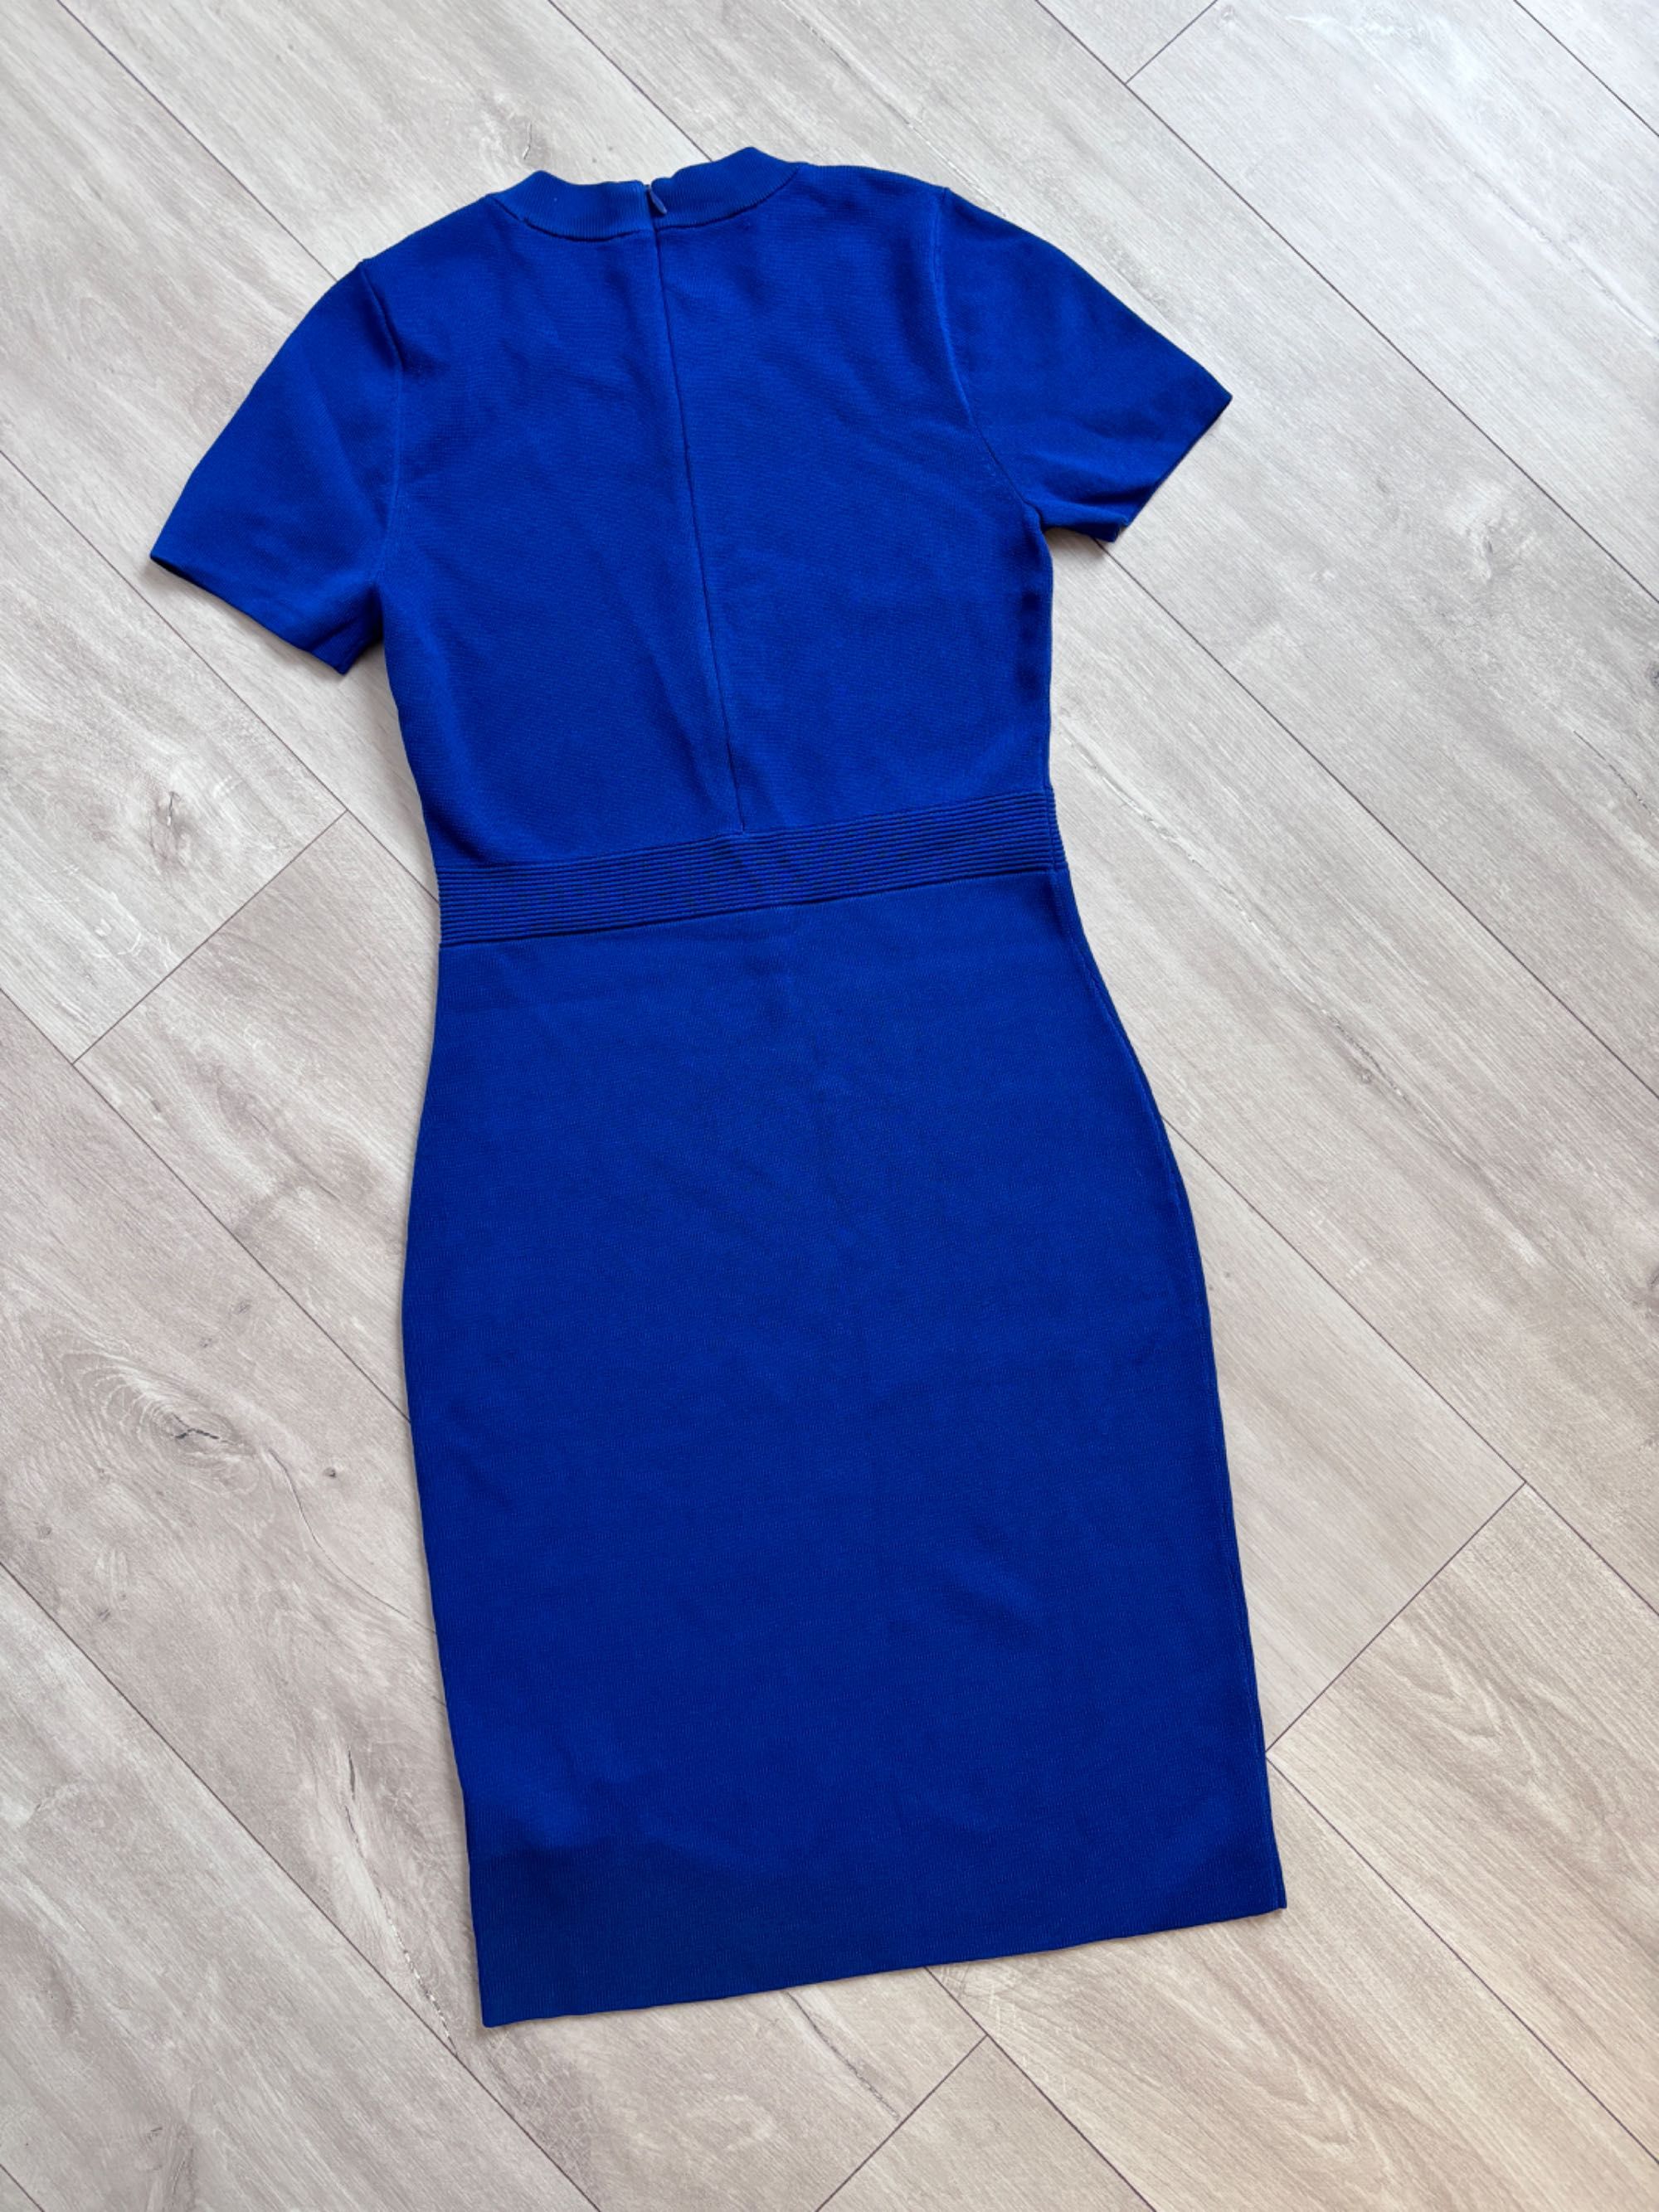 Michael Kors szafirowa modelująca niebieska sukienka XS 34